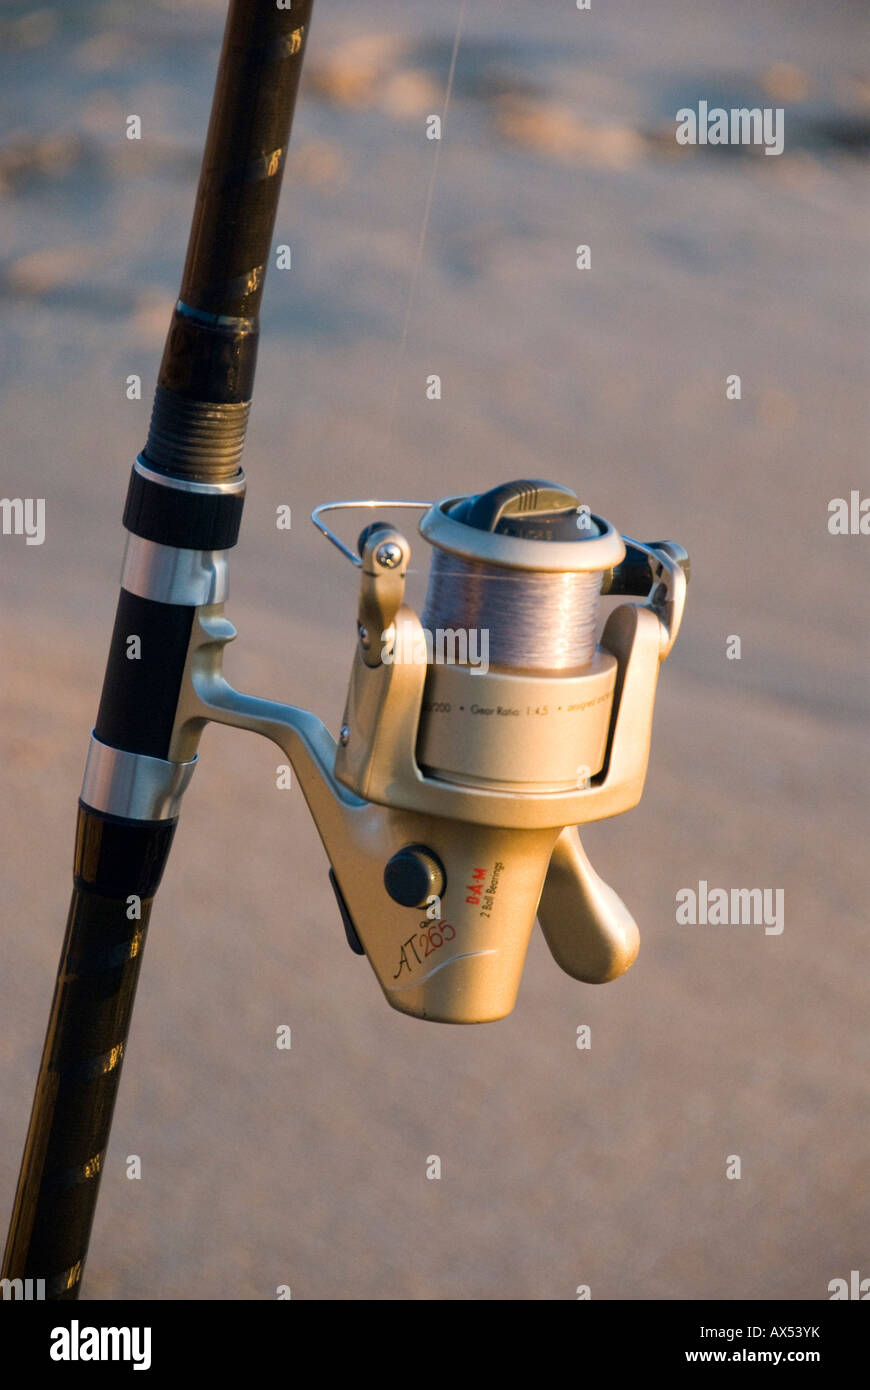 https://c8.alamy.com/comp/AX53YK/close-up-of-fishing-rod-and-reel-AX53YK.jpg